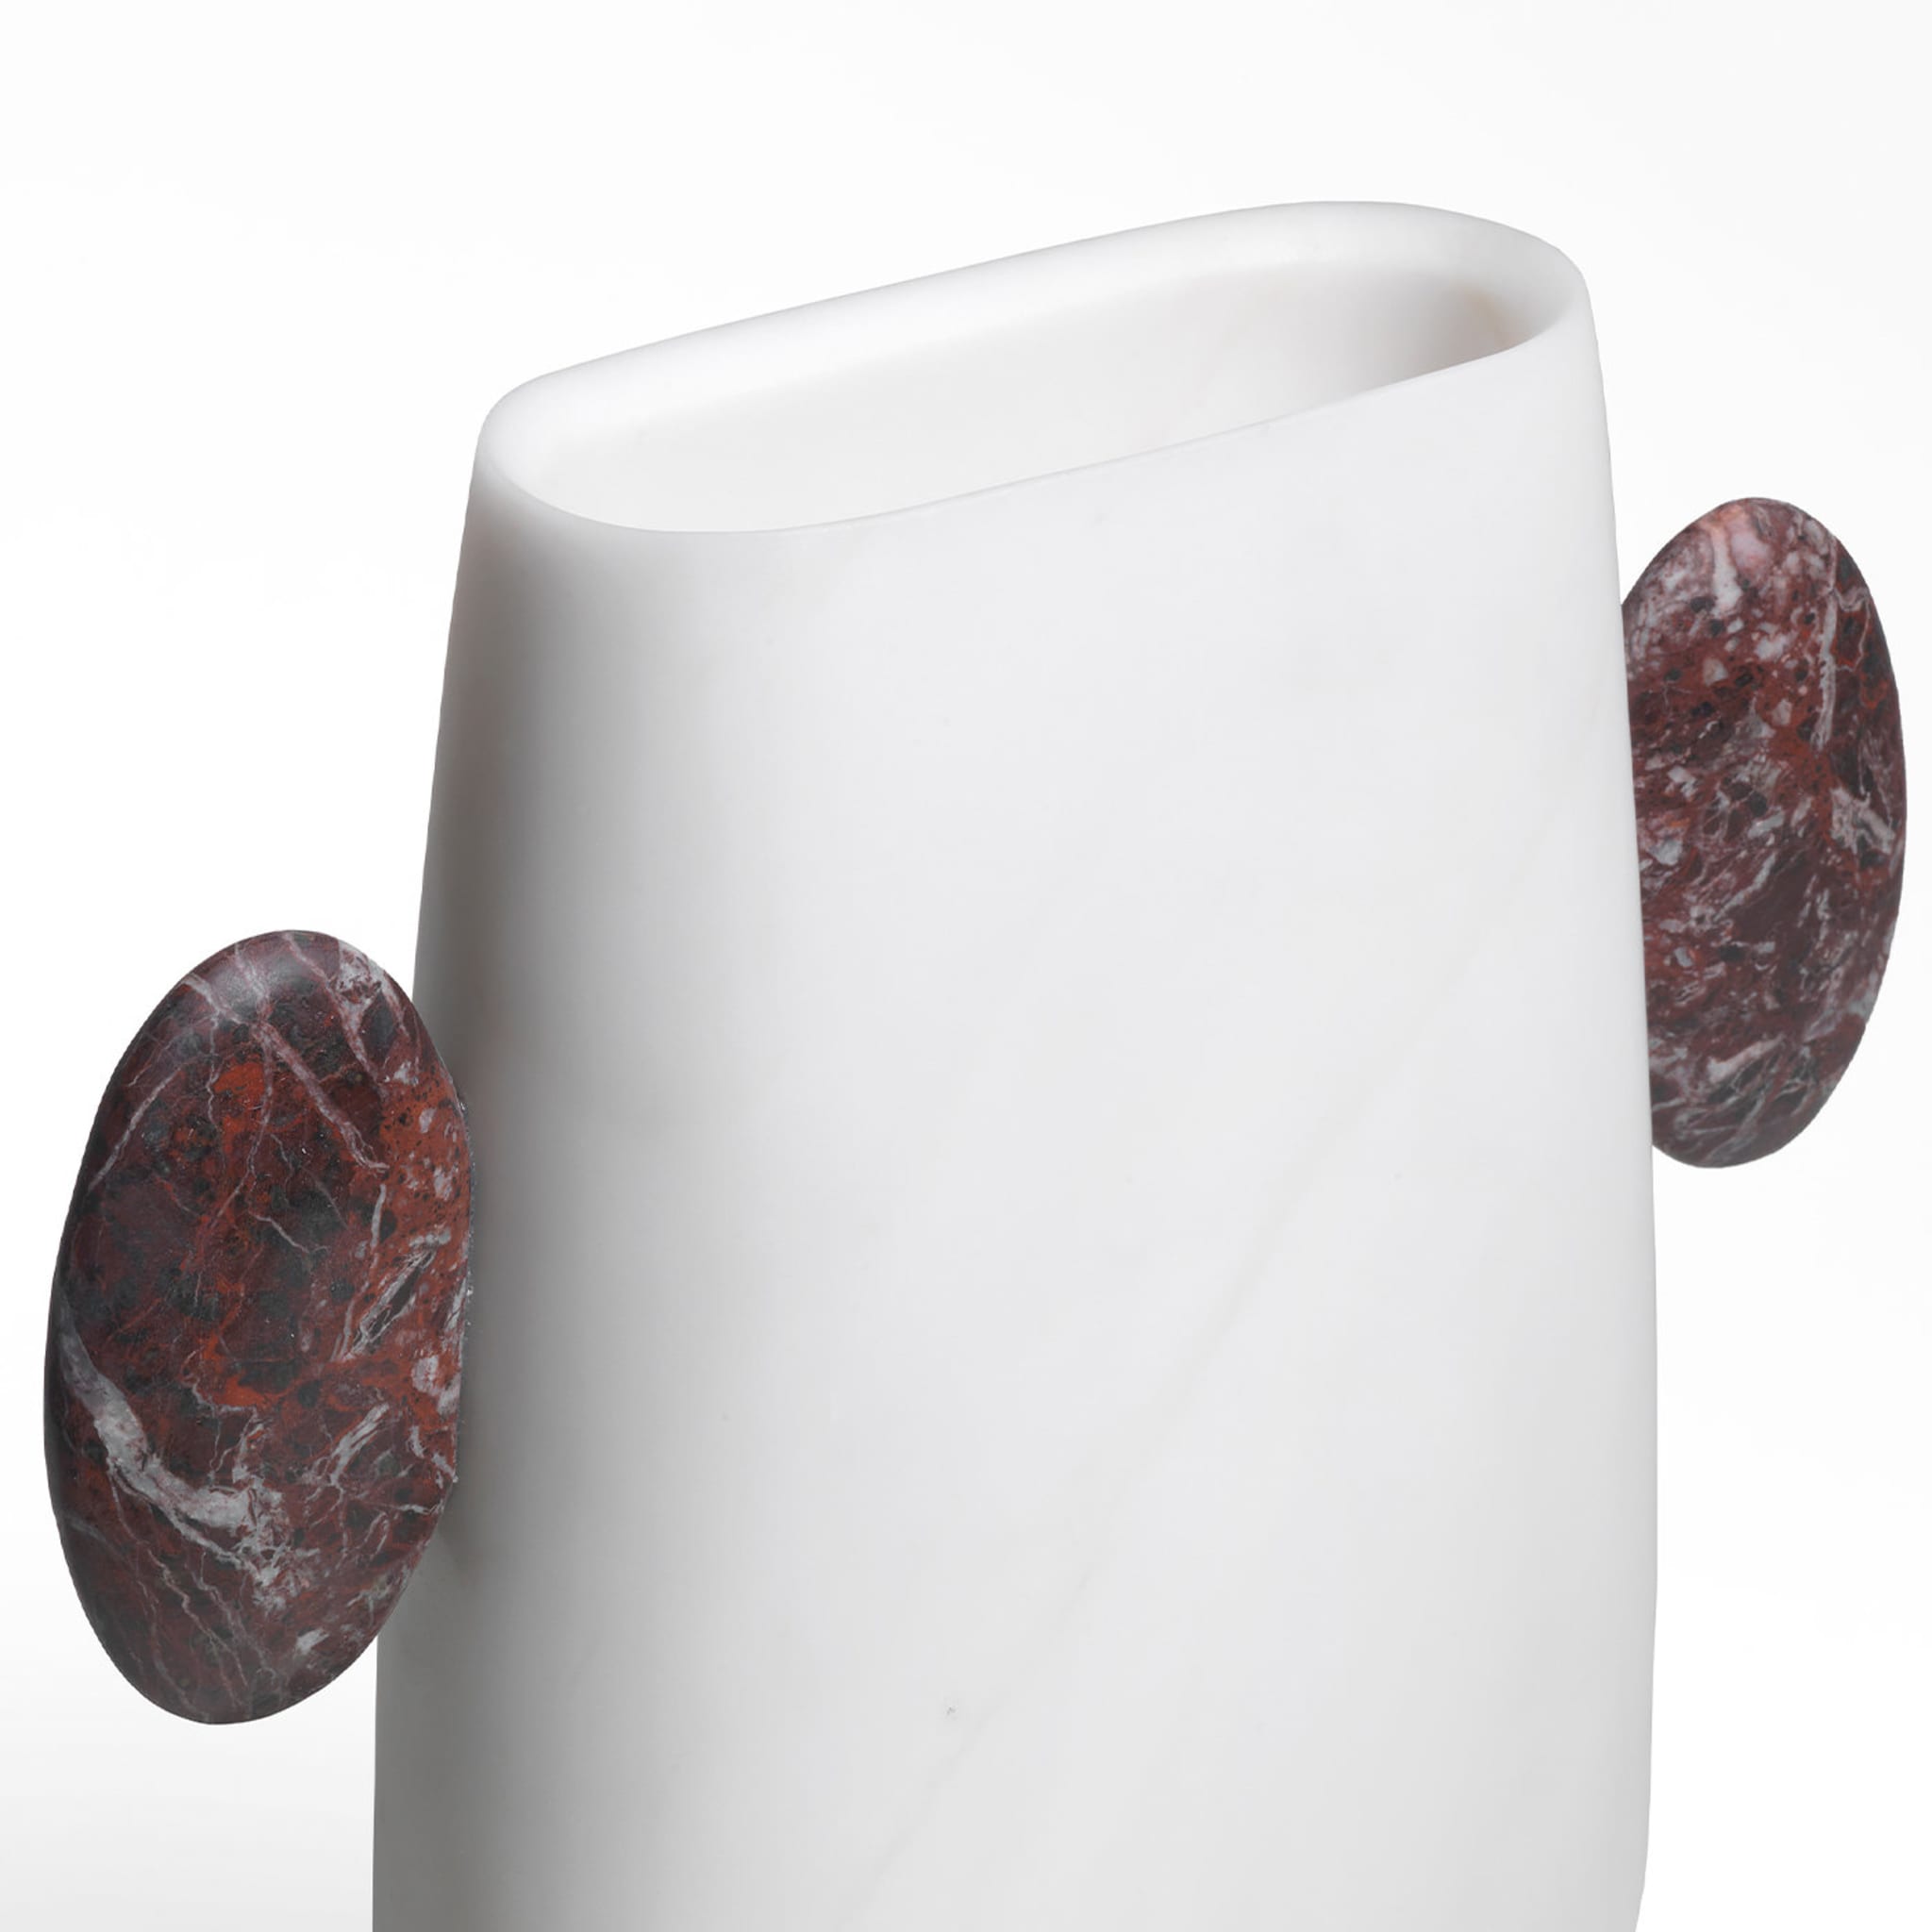 Vase Pietro White Michelangelo/Red Levanto de Matteo Cibic - Vue alternative 2